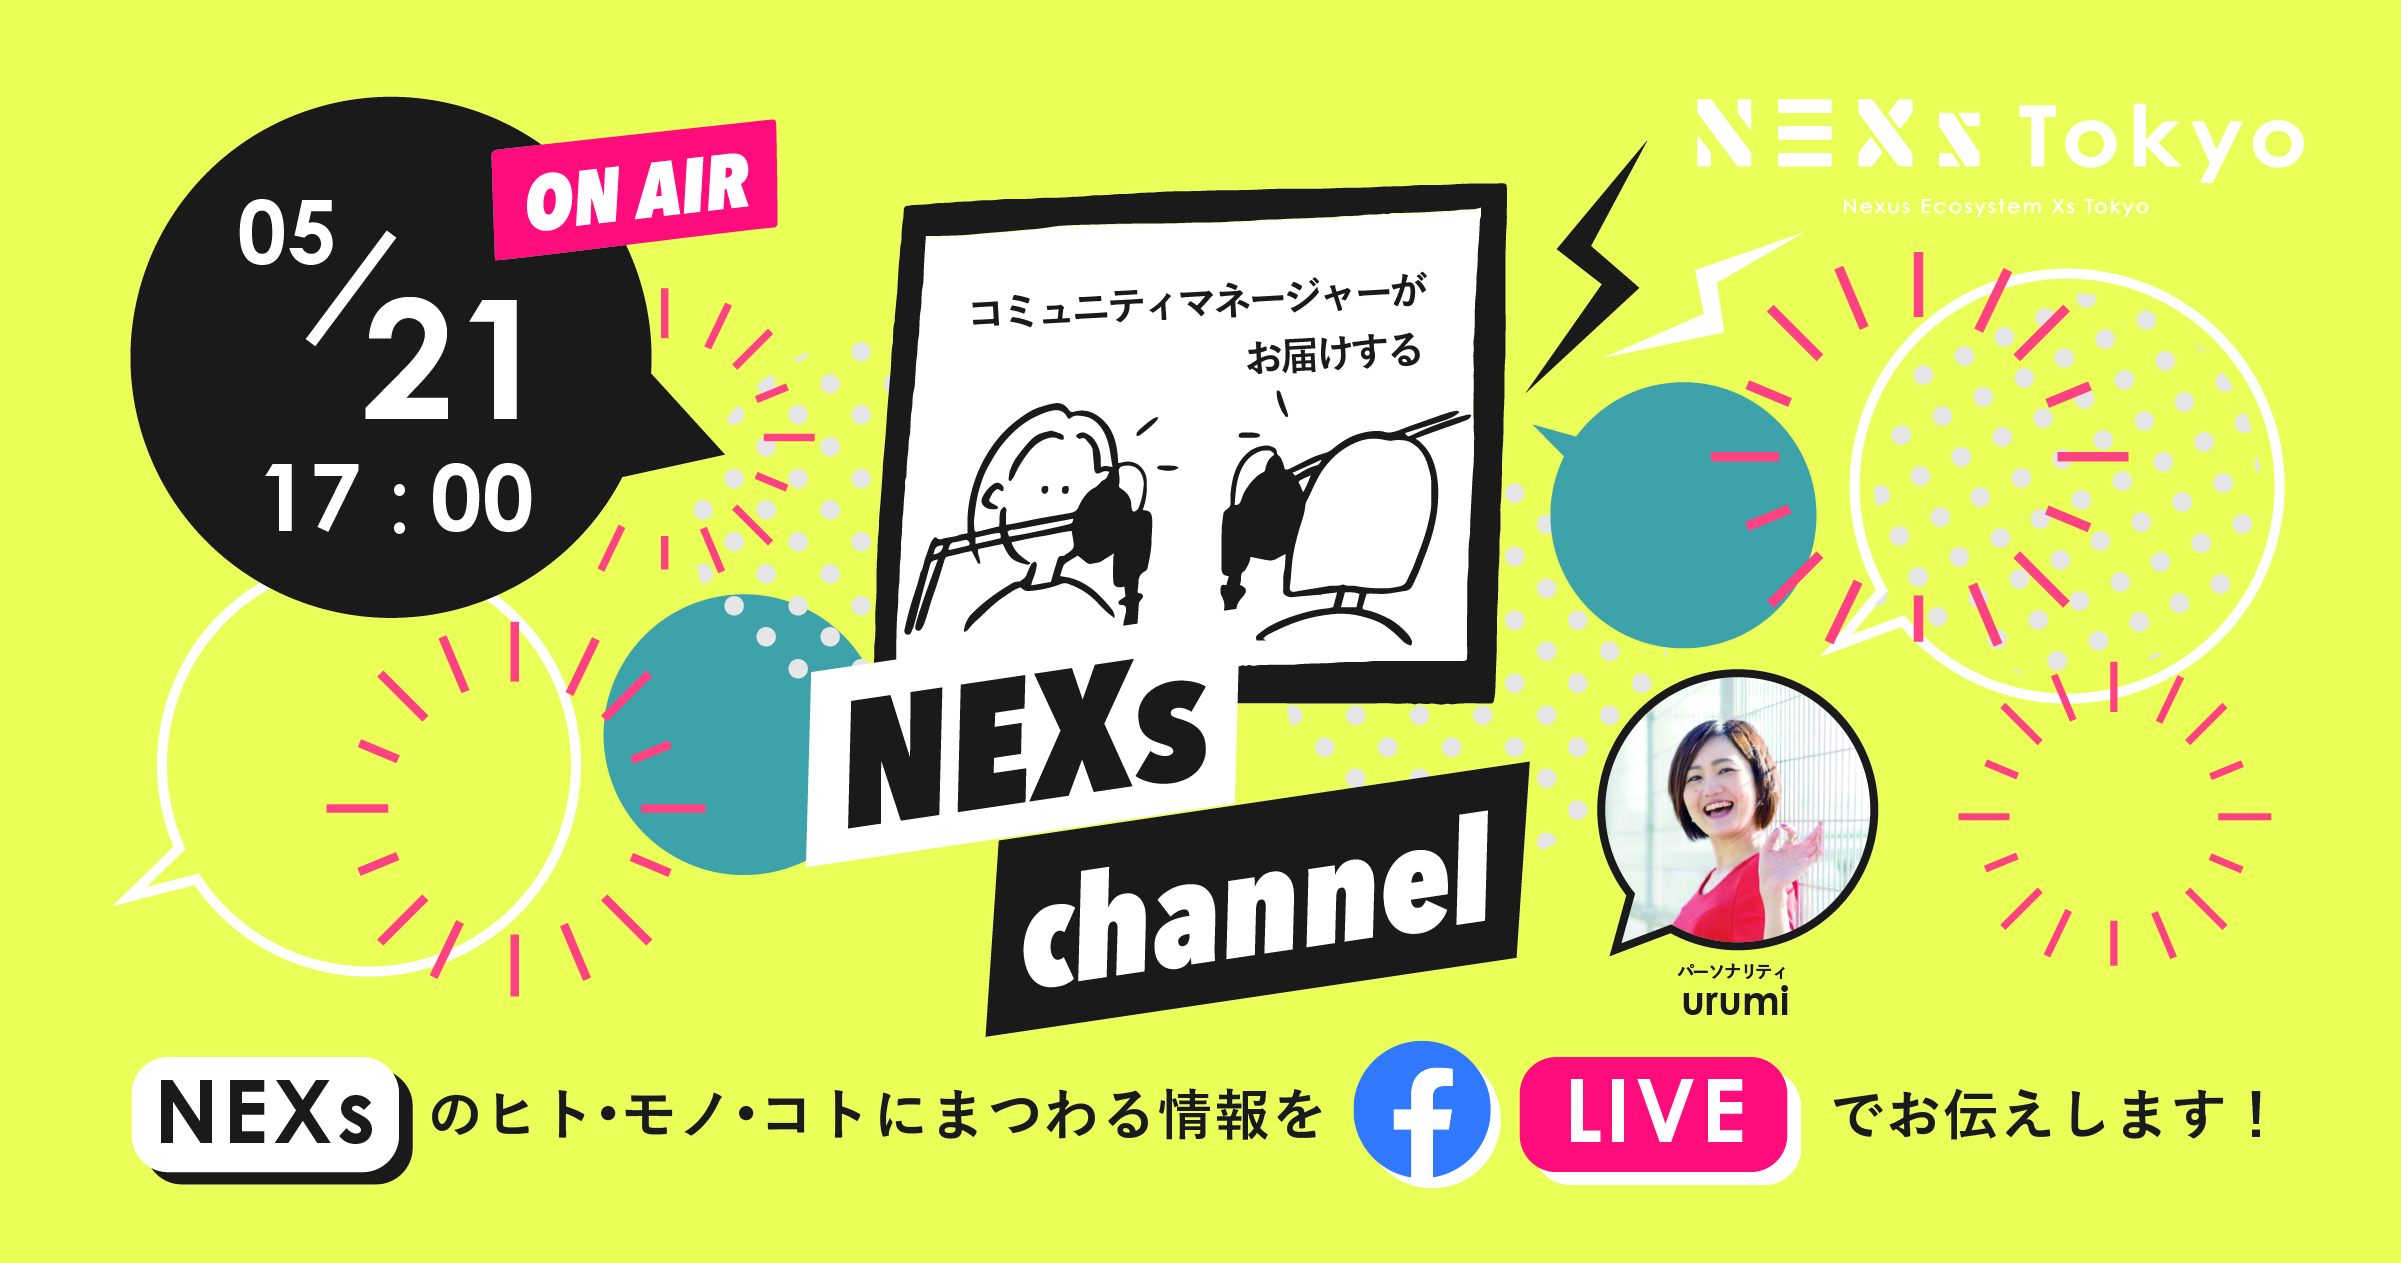 NEXs channel #5 -NEXsTokyoのヒト・モノ・コトを特設ラジオブースから生放送でお届け！-